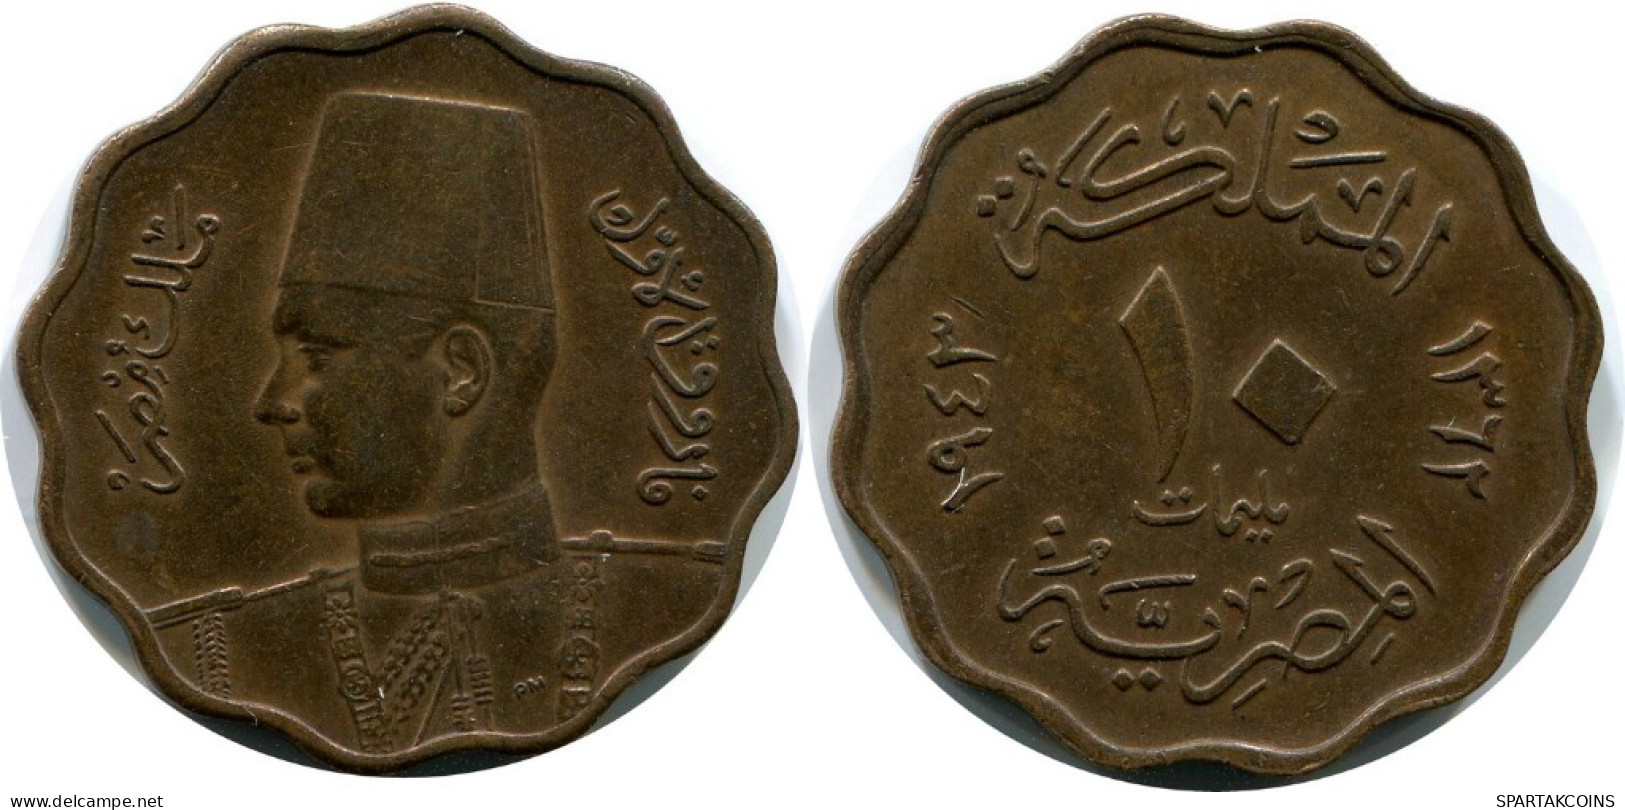 10 MILLIEMES 1943 EGIPTO EGYPT Islámico Moneda #AK029.E.A - Egitto